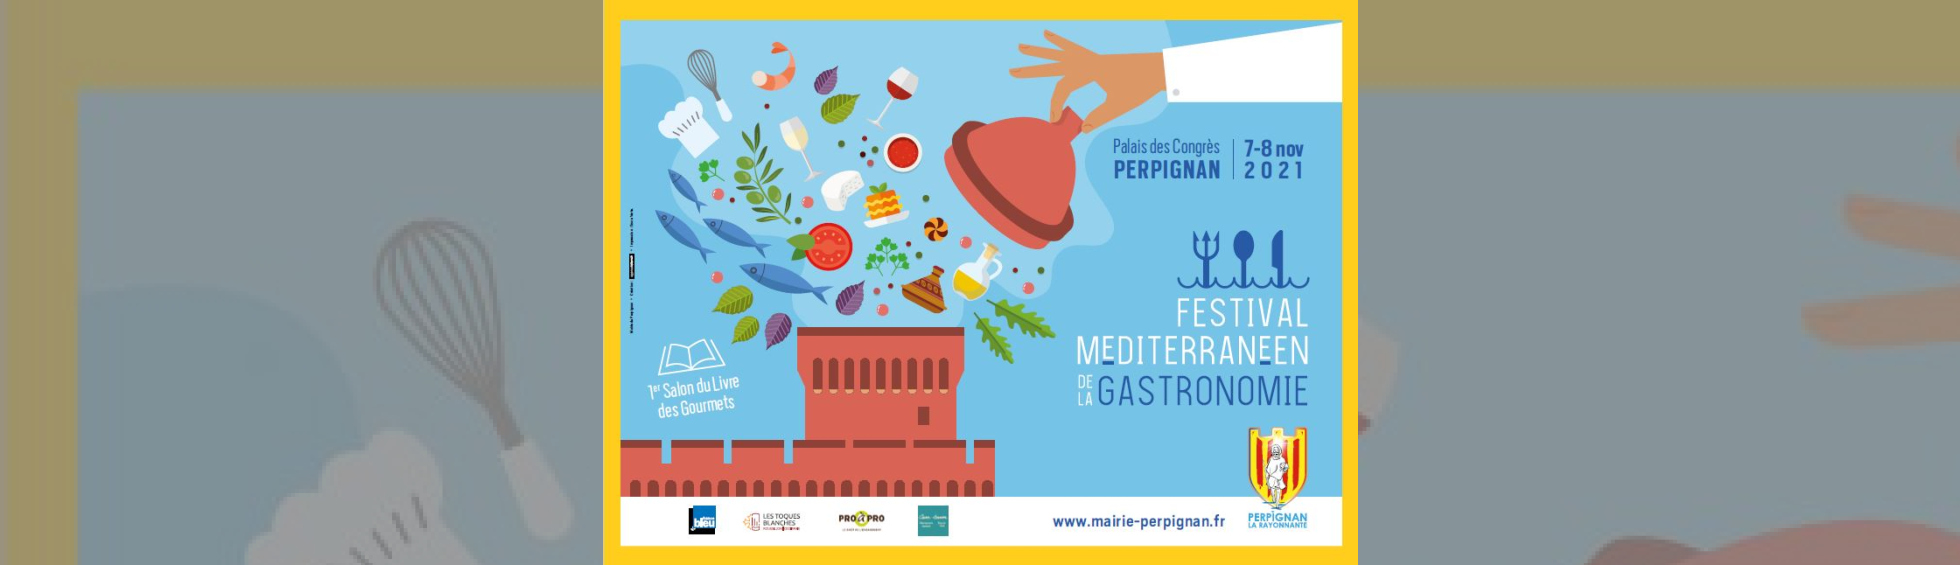 Festival Méditerranéen de la Gastronomie